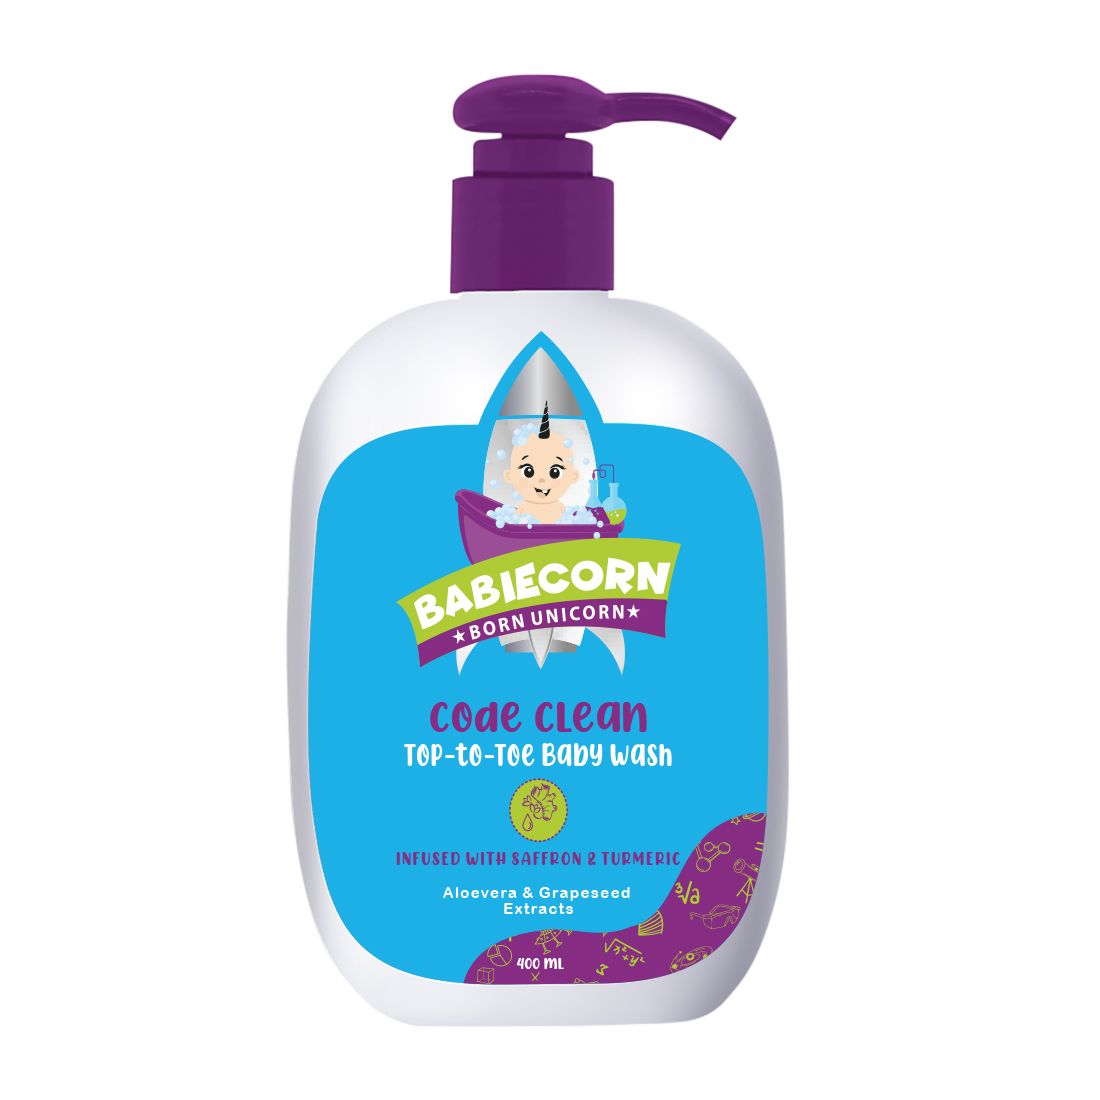 BABIECORN Code Clean Baby Top-to-toe Wash Infused with Saffron & Turmeric Aloevera (400 ml)